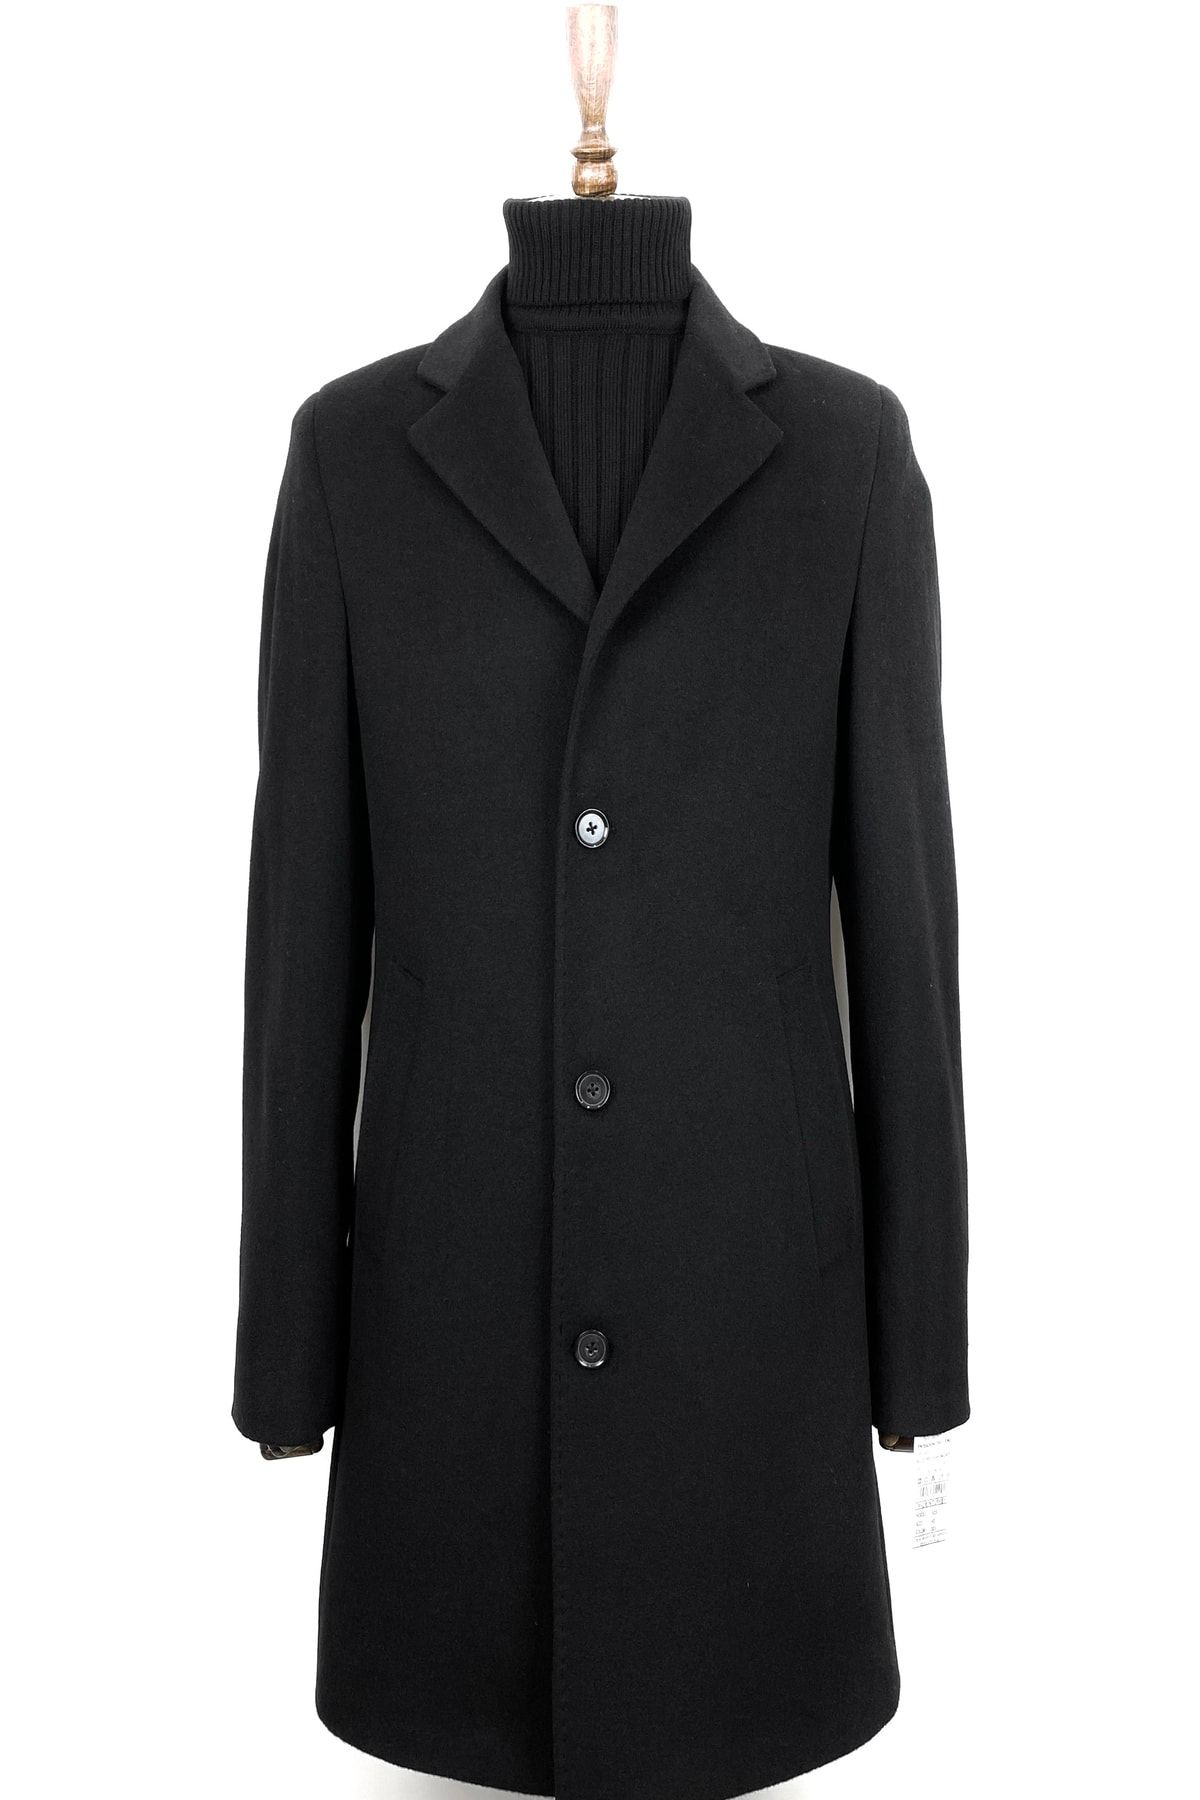 ŞAN GİYİM 905 Erkek Siyah Ceket Yaka Kısa Palto